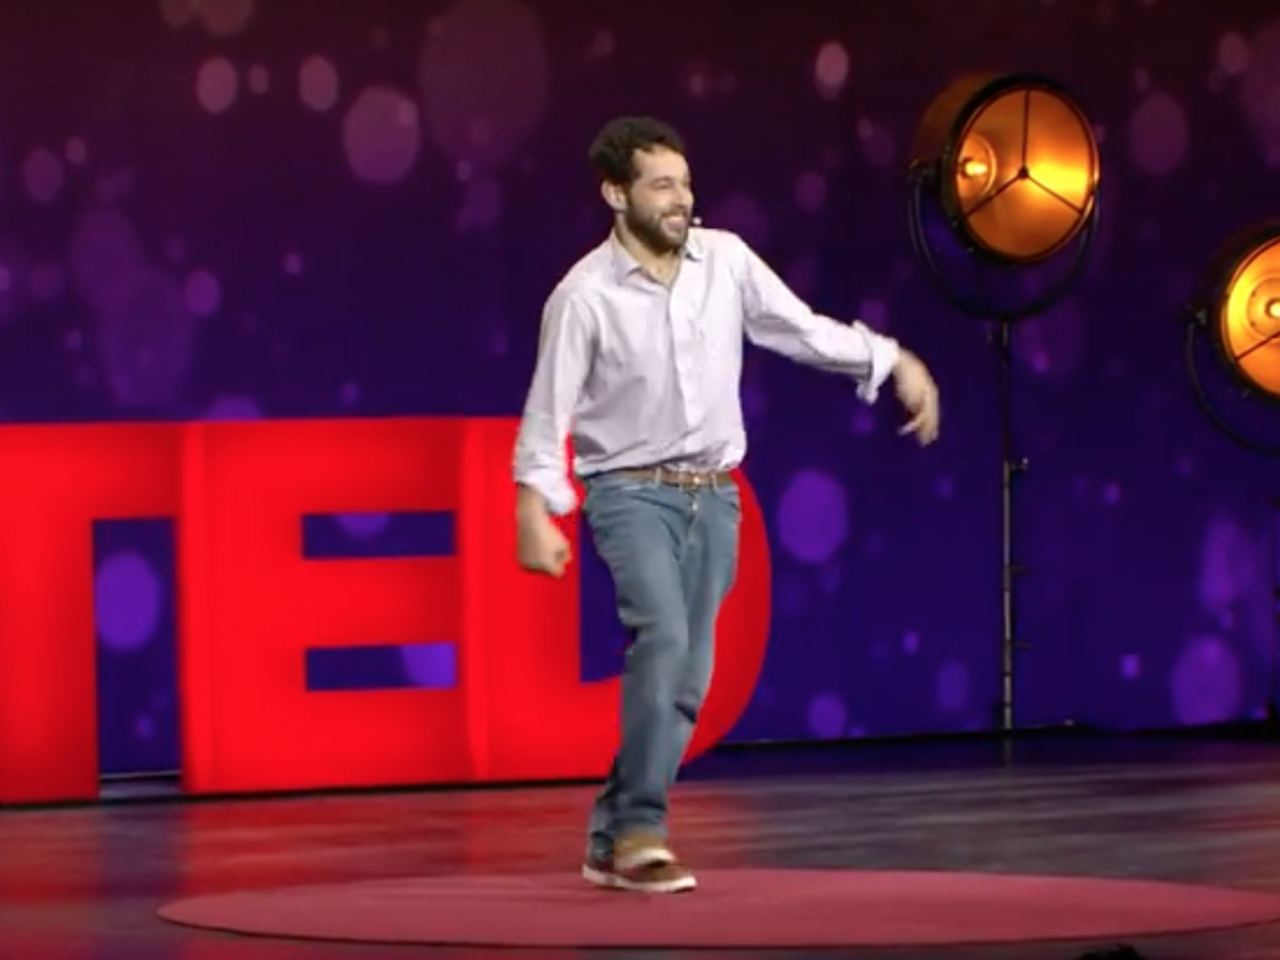 Filmmaker Reid Davenport walks onto the stage to present a TED Talk.